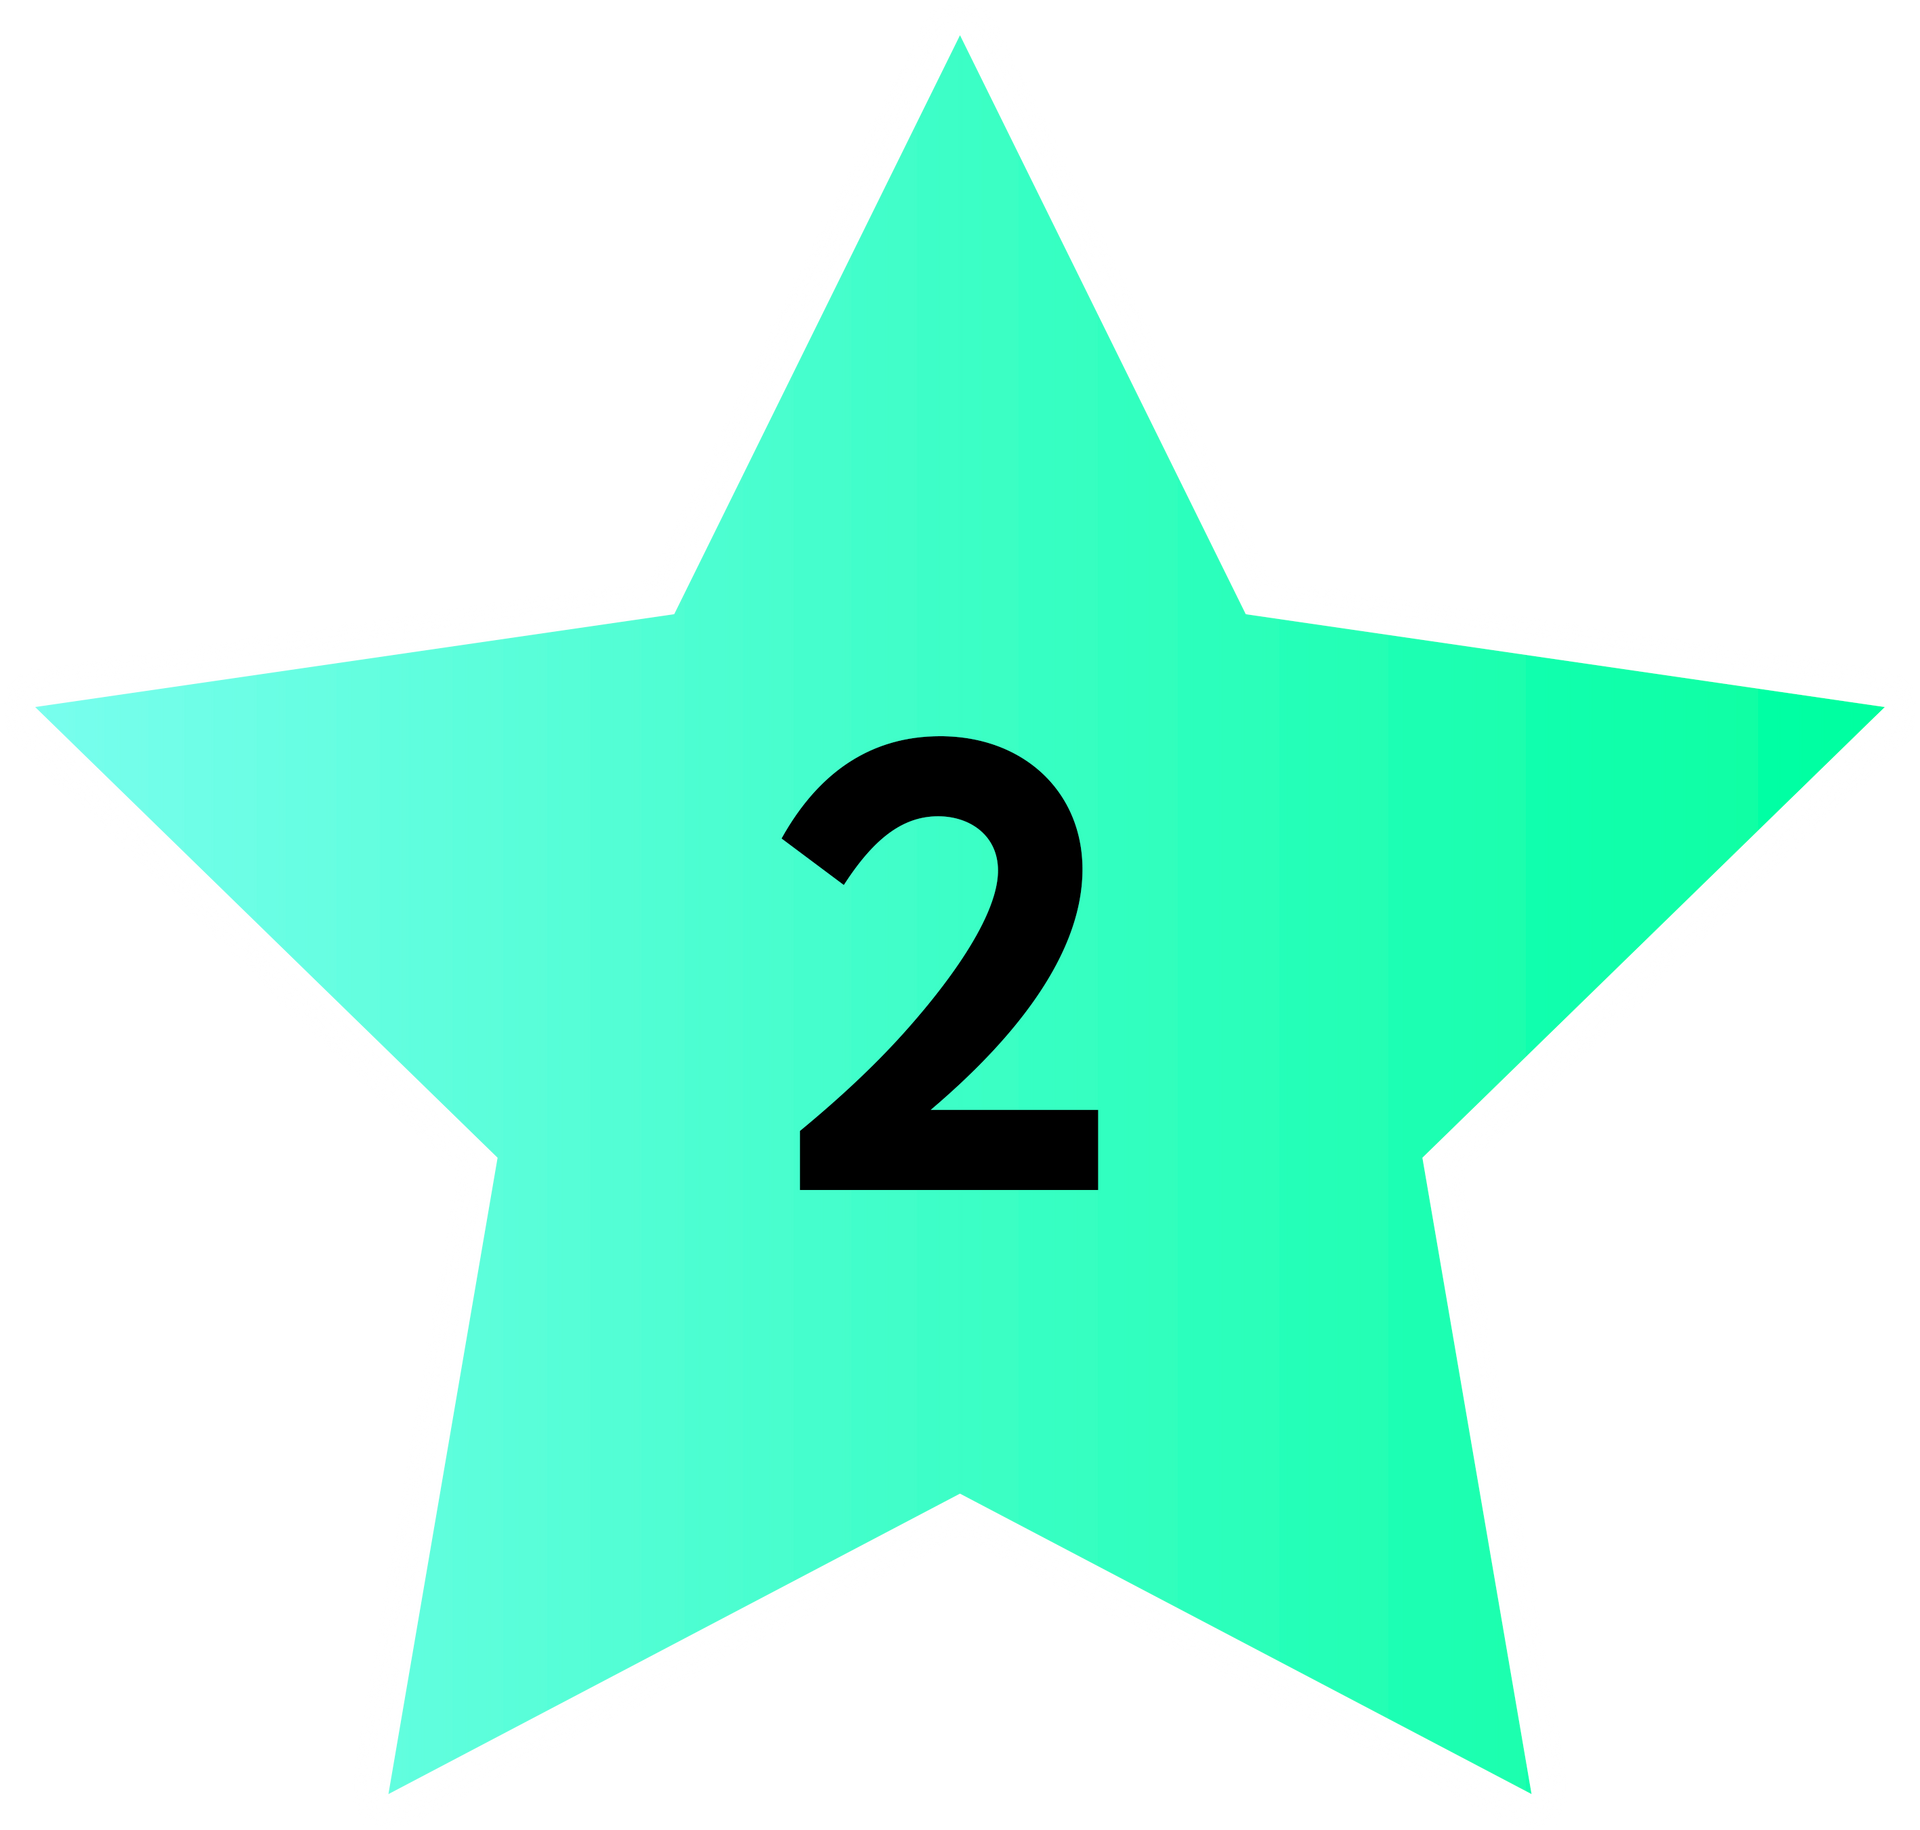 2 stars